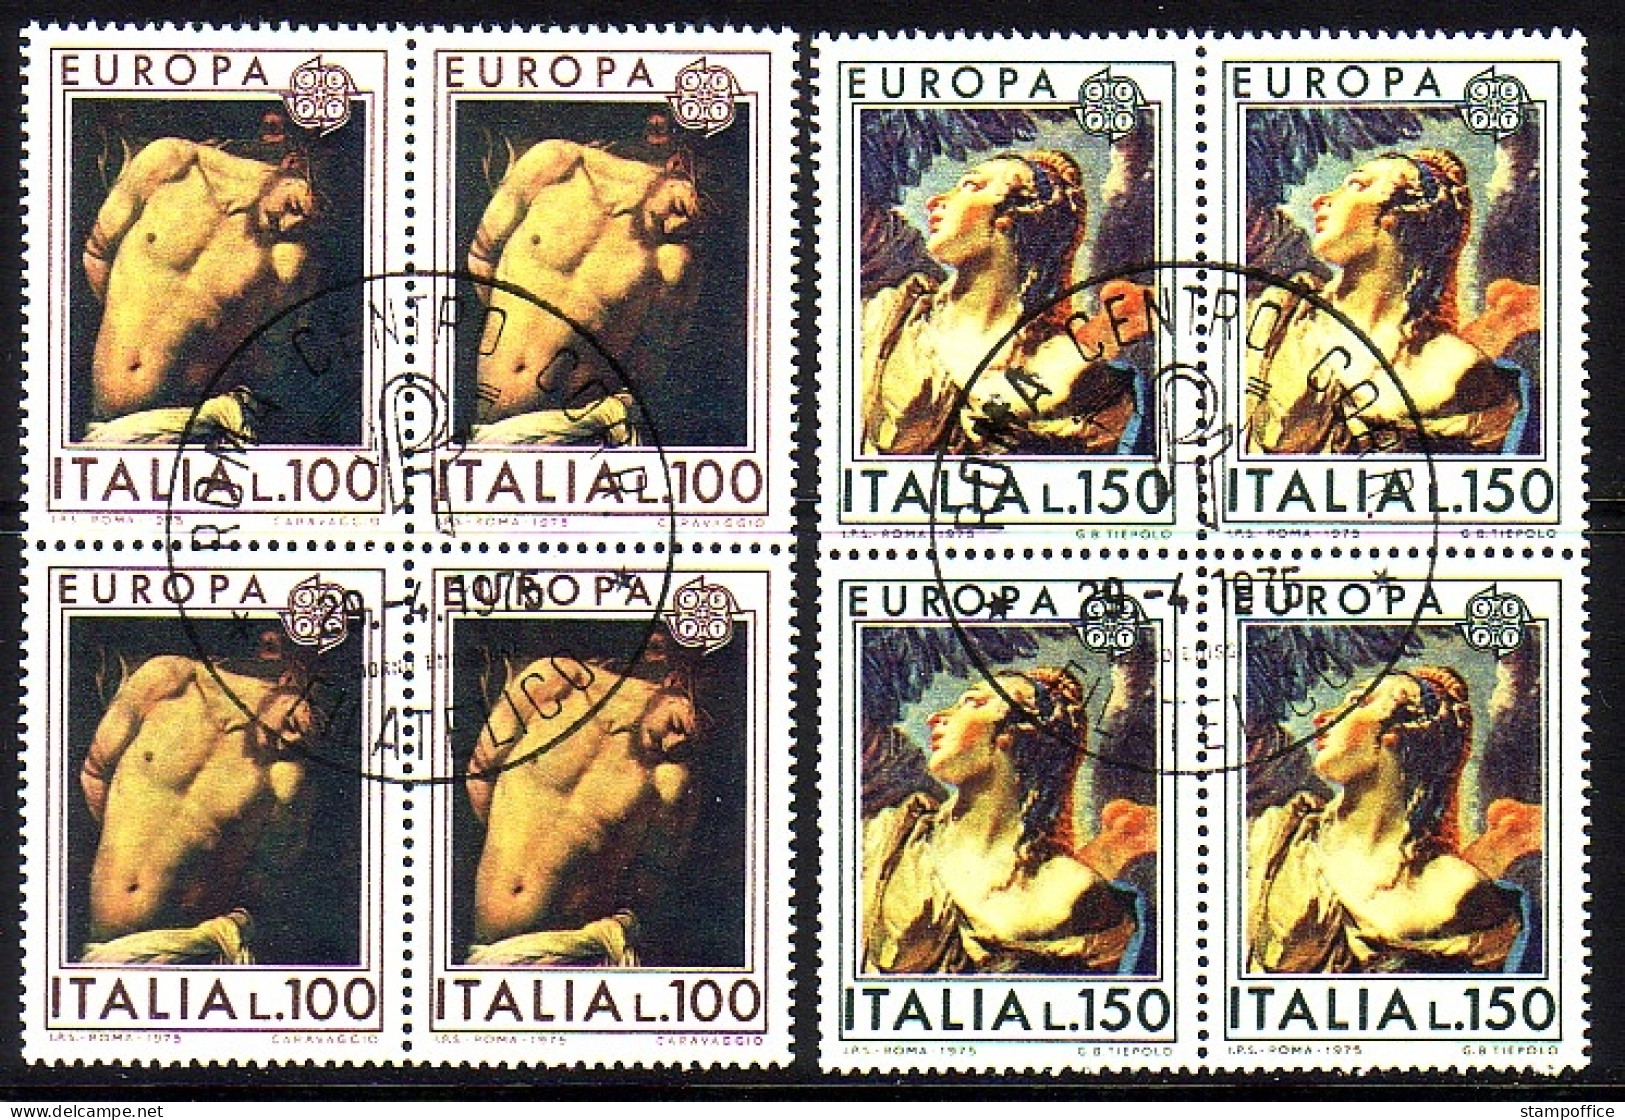 ITALIEN MI-NR. 1489-1490 O 4er BLOCK EUROPA 1975 - GEMÄLDE MICHELANGELO UND TIEPOLO - 1975